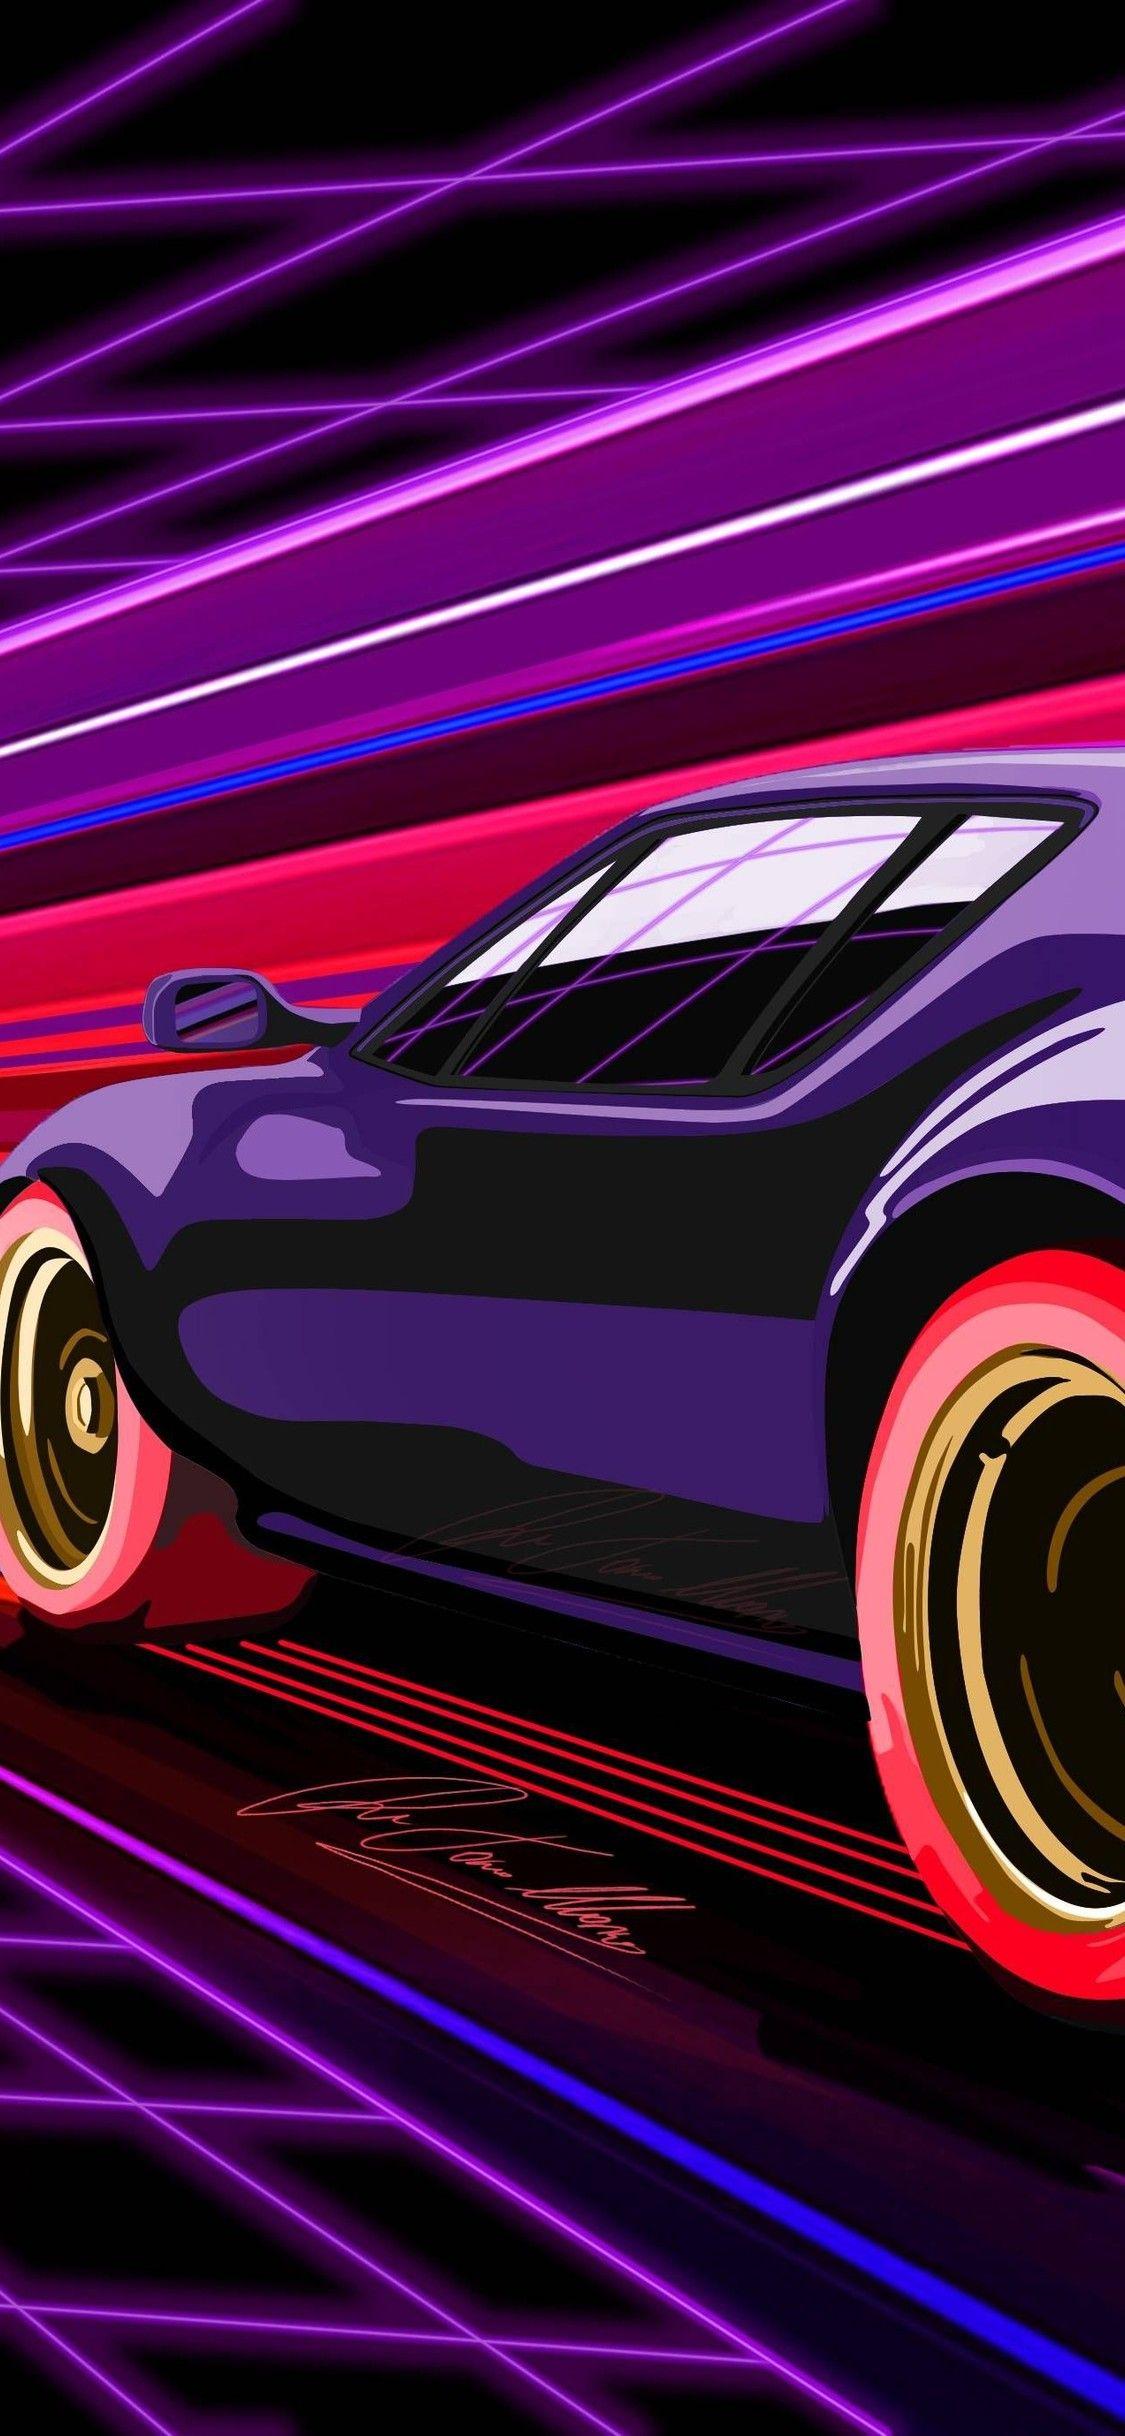 Retro Racing Muscle Car iPhone X. Cool wallpaper for phones